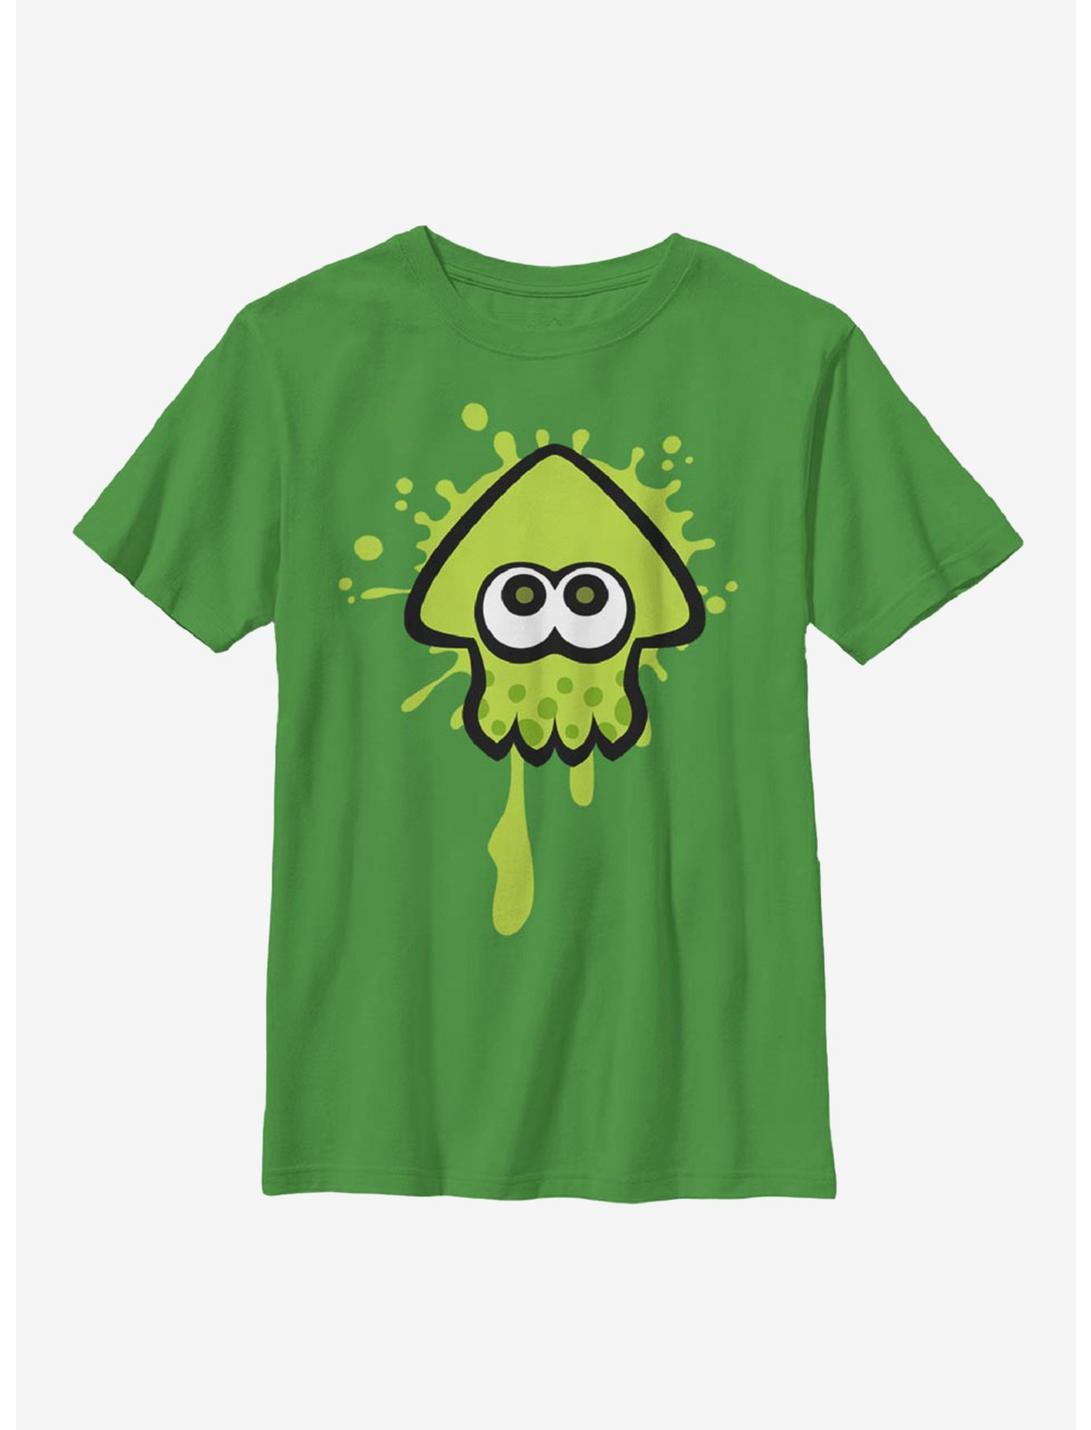 Nintendo Splatoon Team Green Youth T-Shirt, KELLY, hi-res